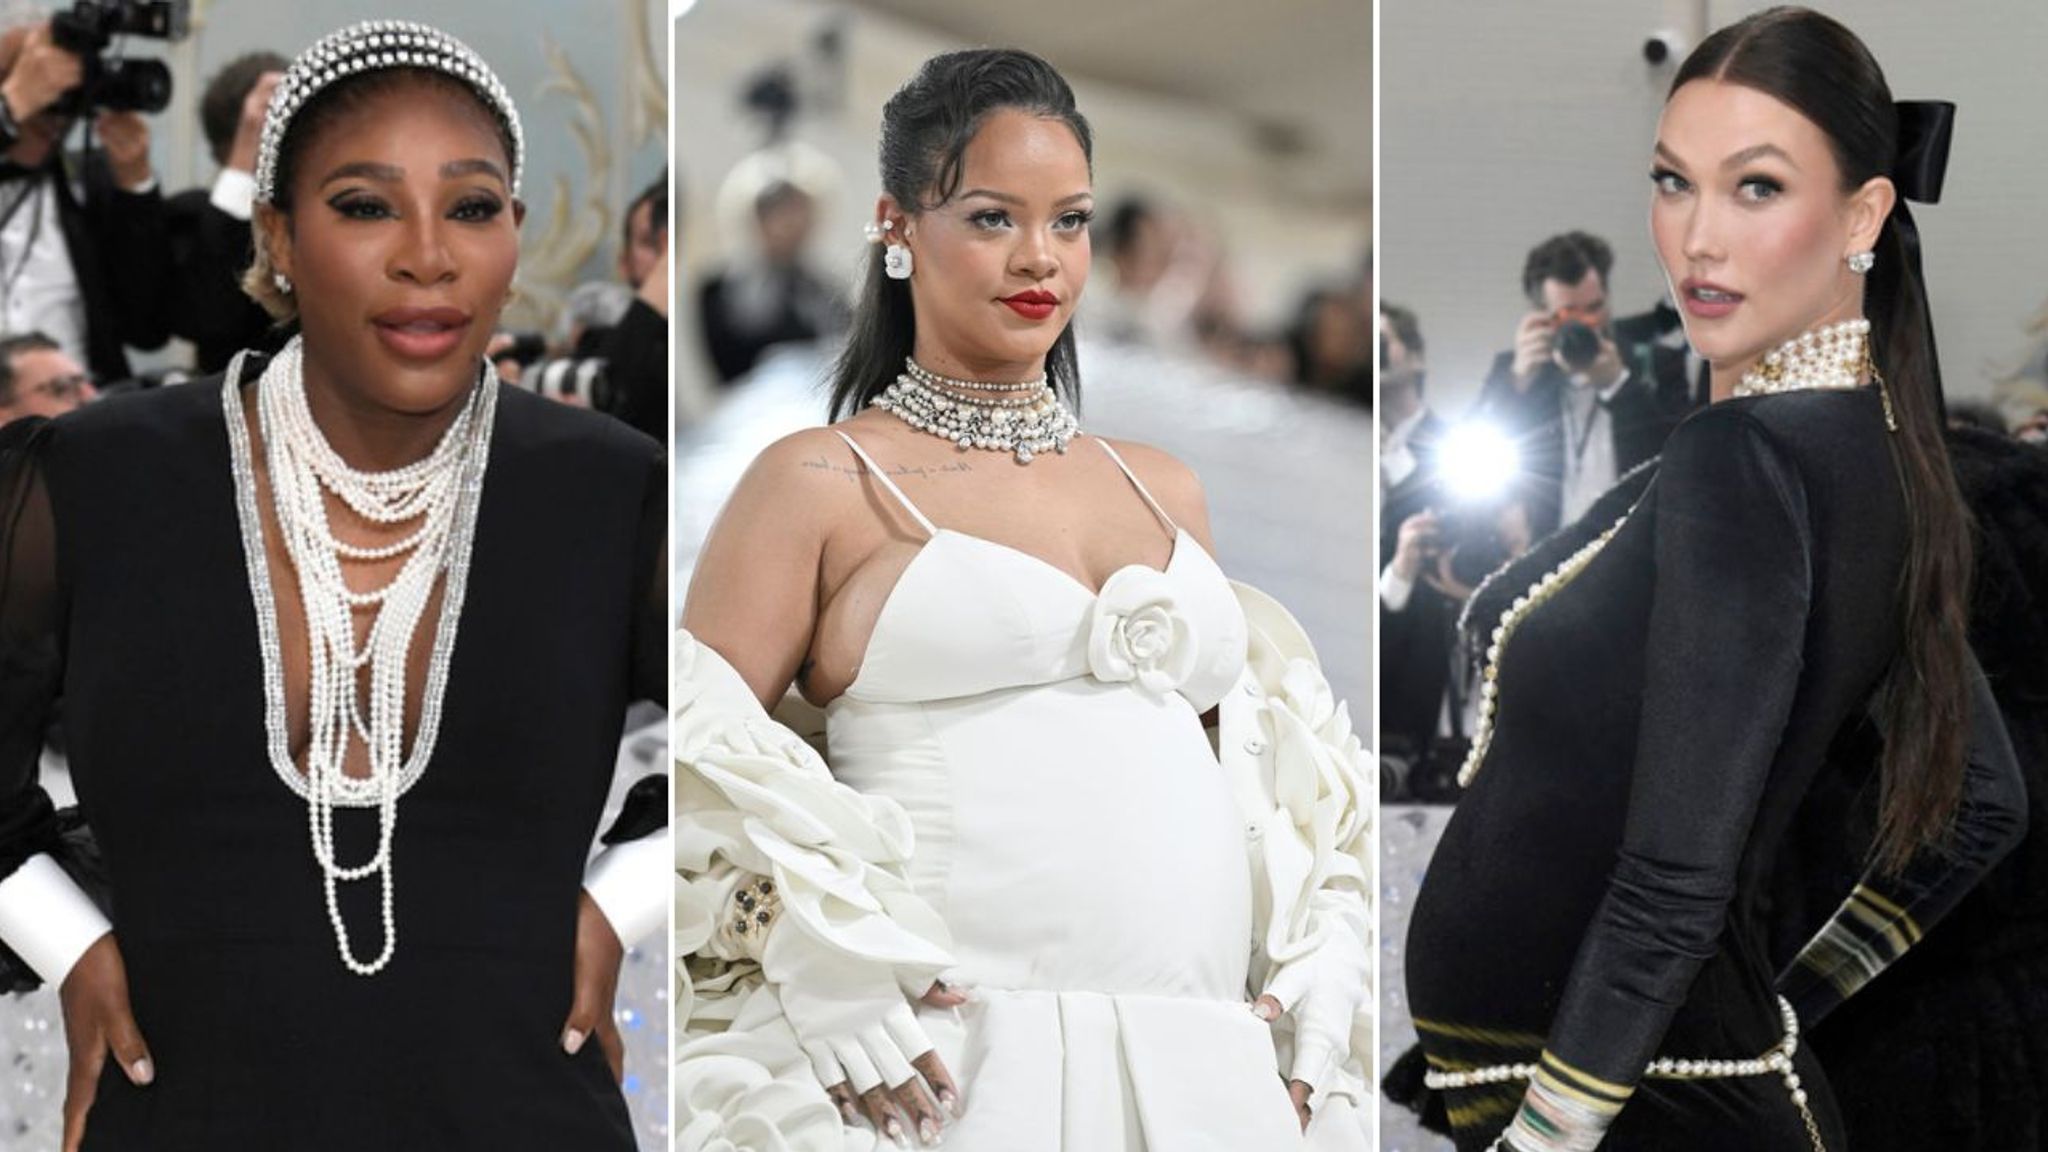 Serena Williams, Karlie Kloss reveal pregnancies at Met Gala